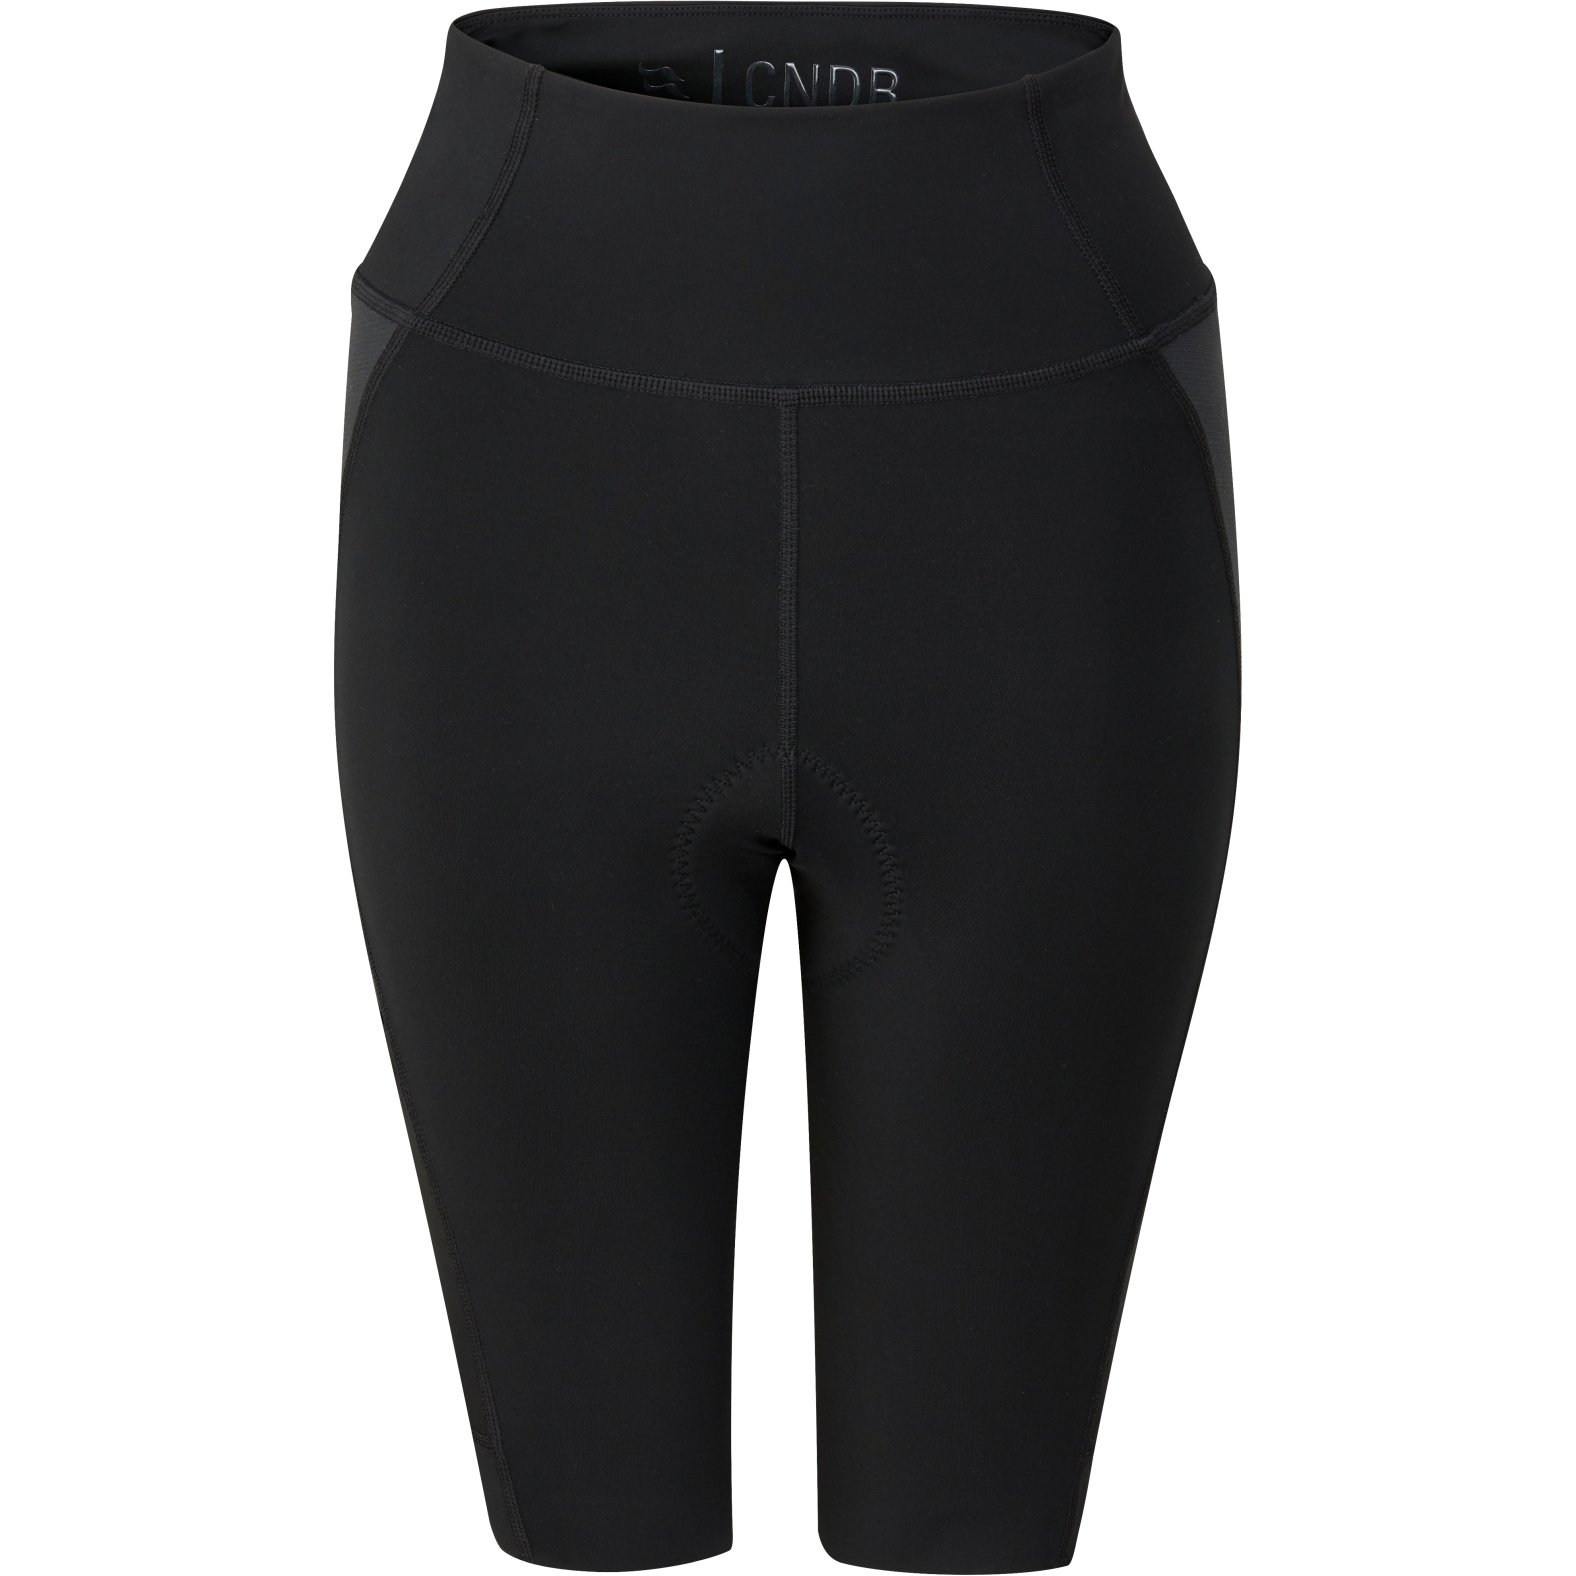 Rab Cinder Cargo Women's Shorts - black | BIKE24